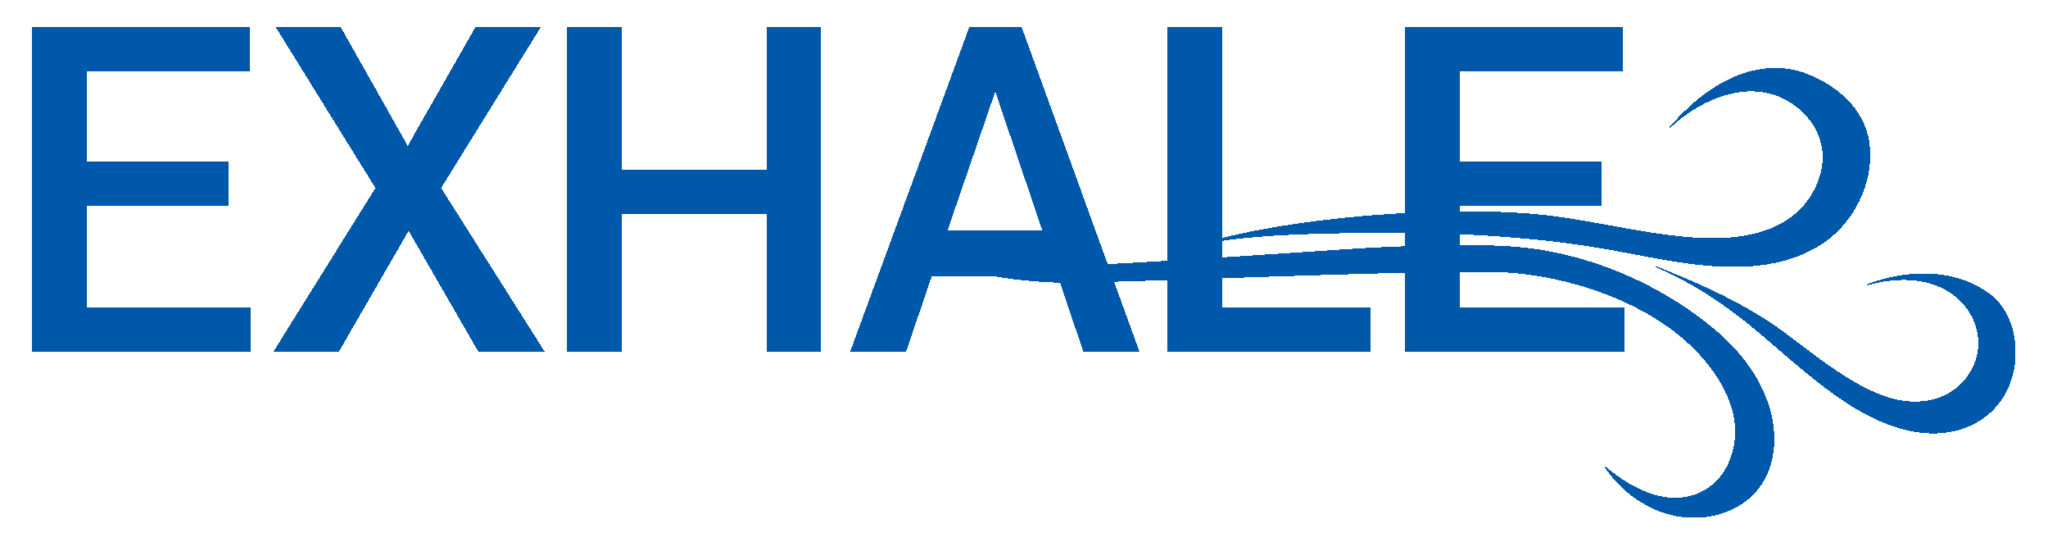 EXHALE logo in blue